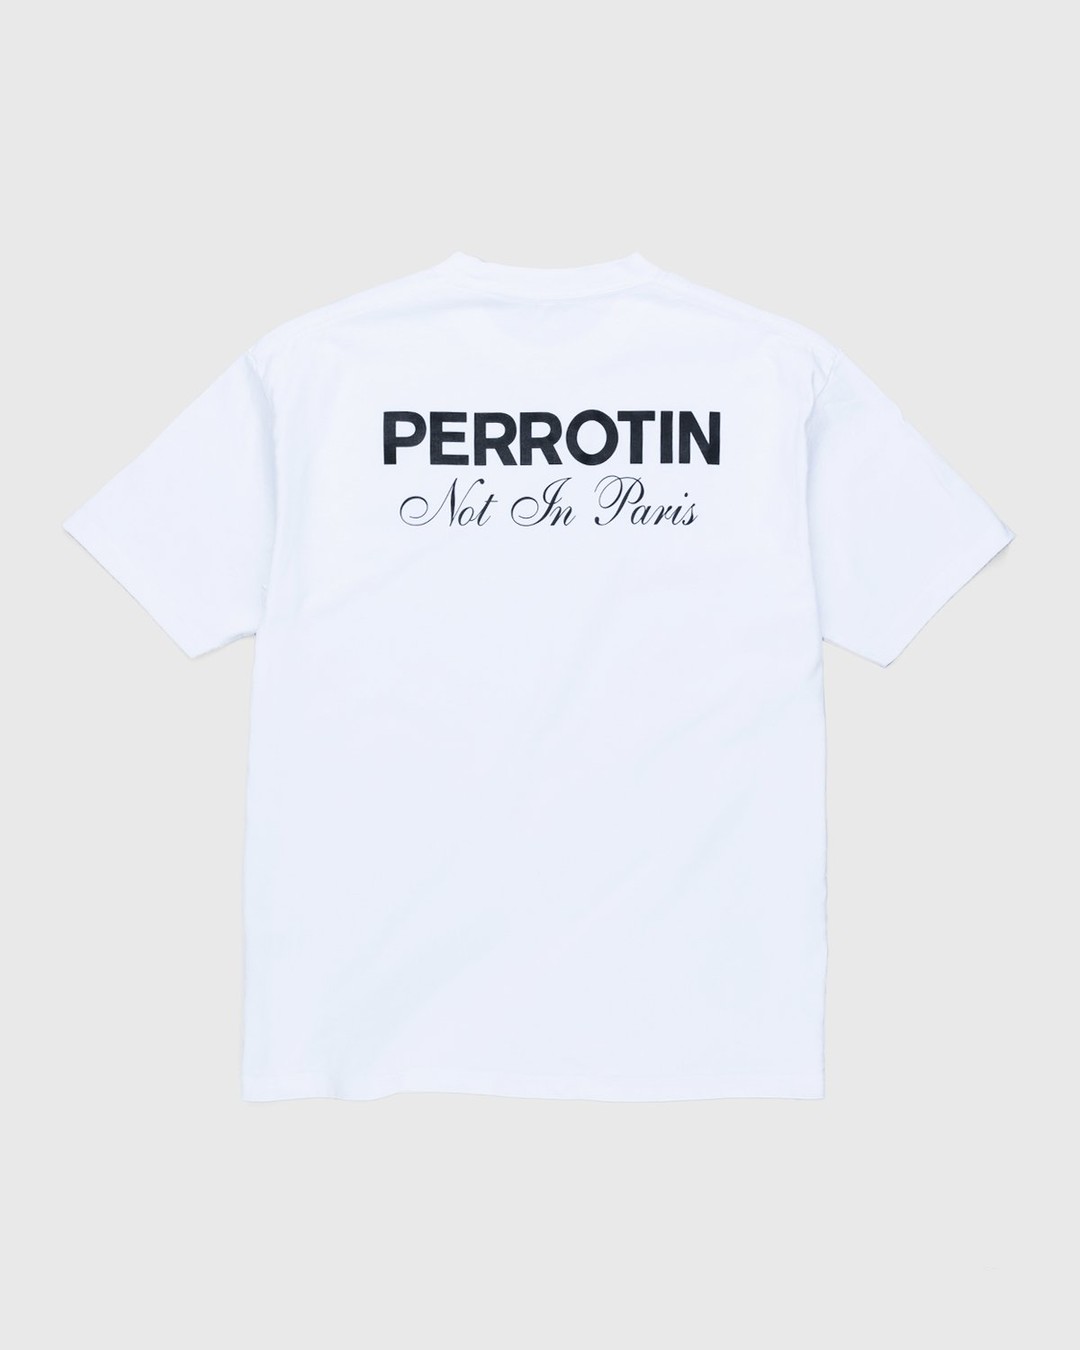 Highsnobiety – Not In Paris 3 x Galerie Perrotin T-Shirt White - T-shirts - White - Image 1